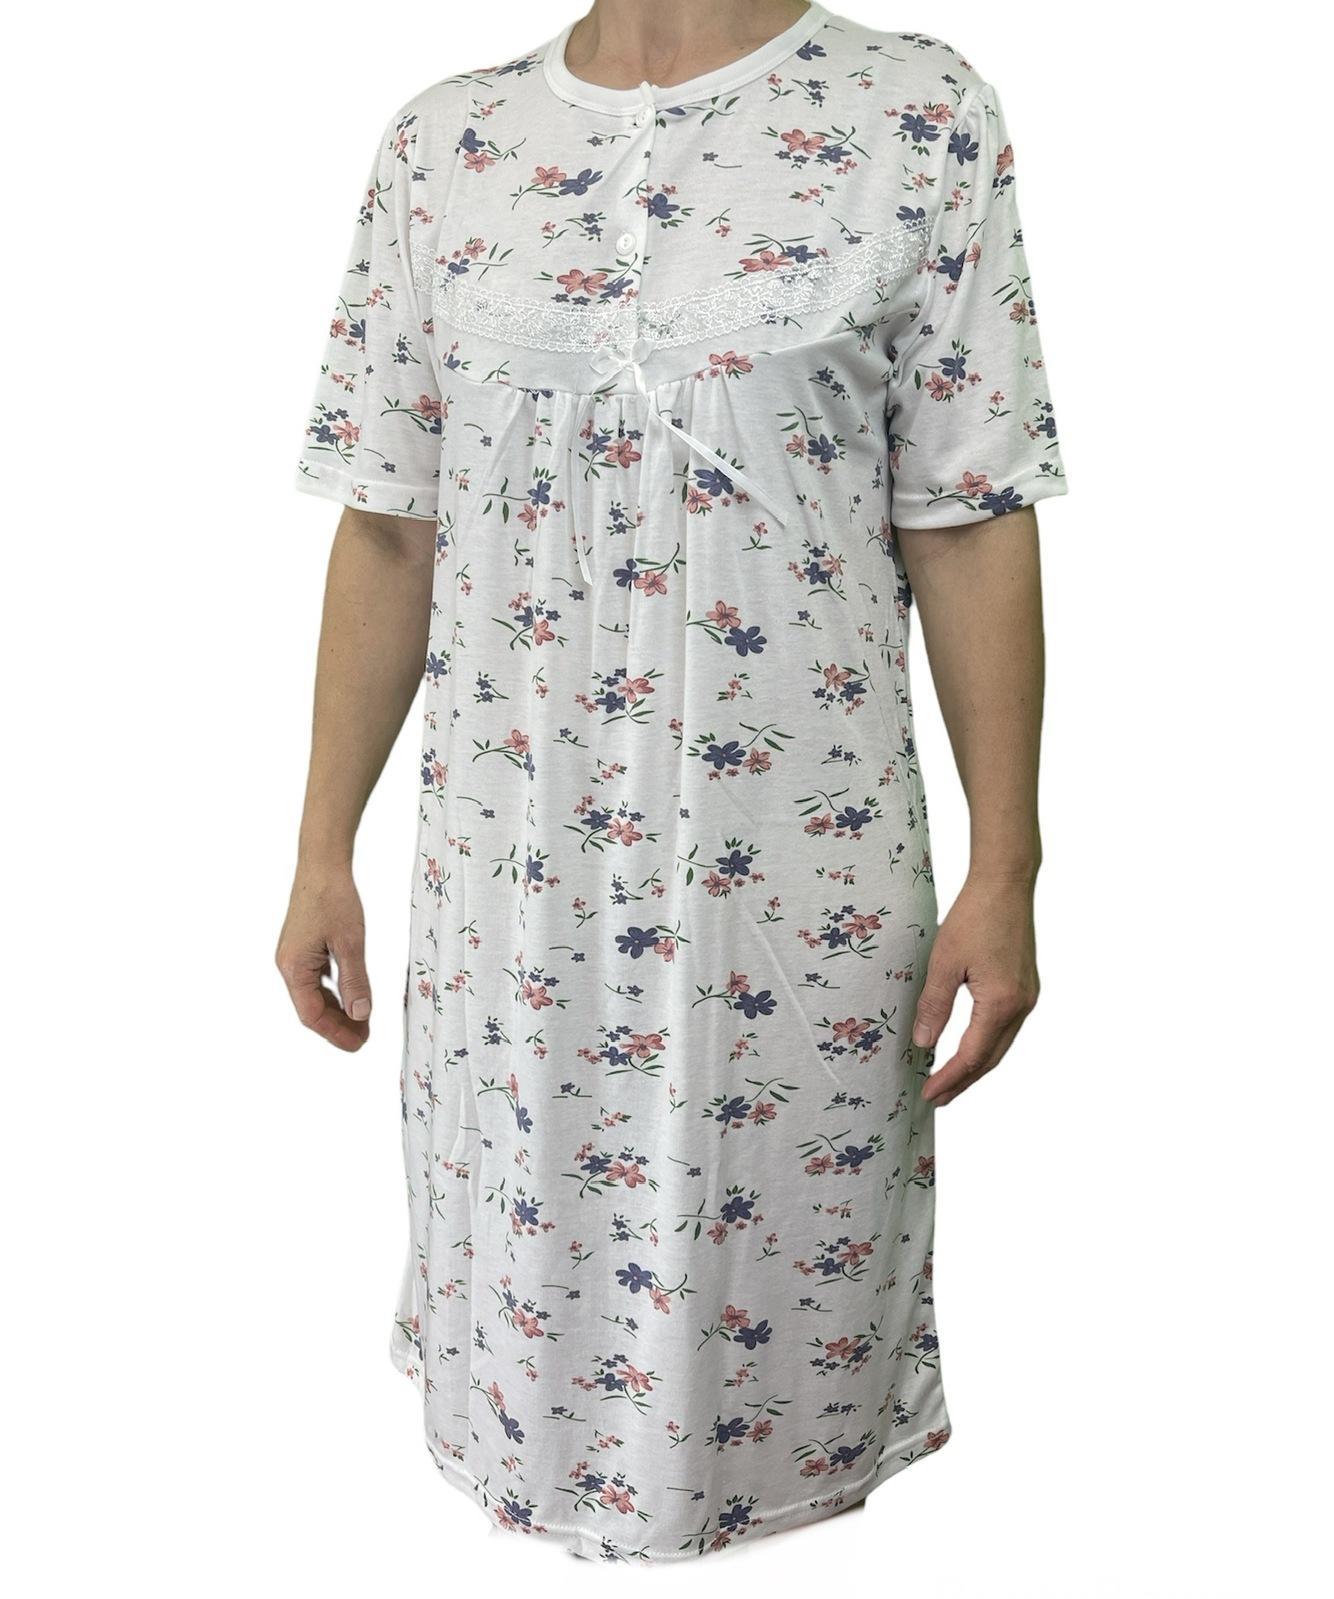 Womens Ladies Cotton Nightie Night Gown Slip Petticoat PJs Sleepwear Dress - White/Pink - 22